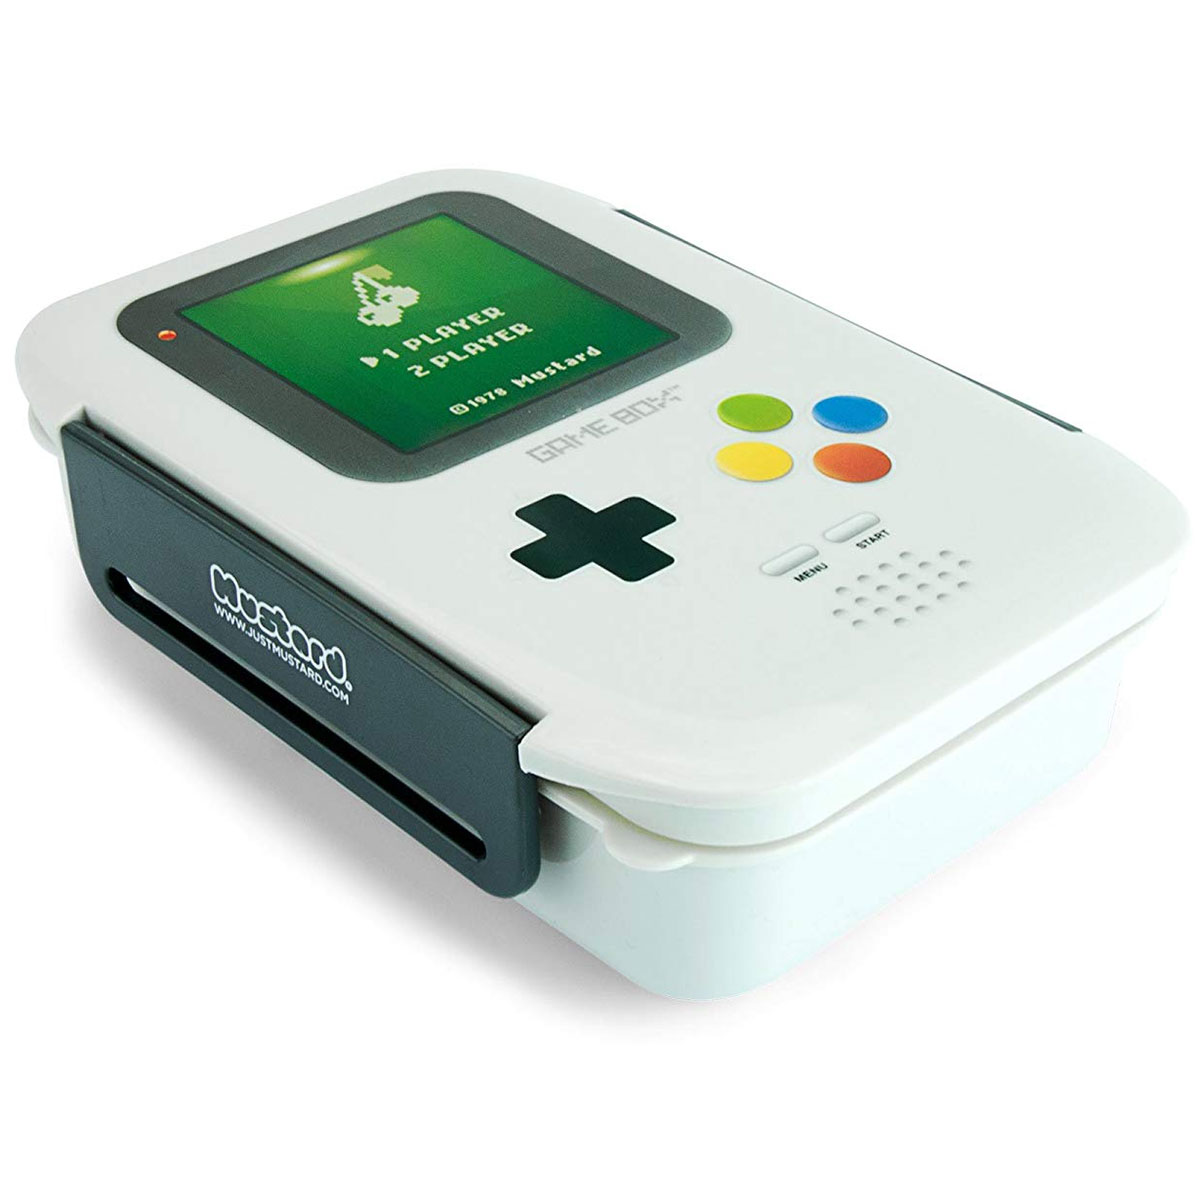 https://www.geekalerts.com/u/Game-Box-Retro-Console-Lunchbox.jpg